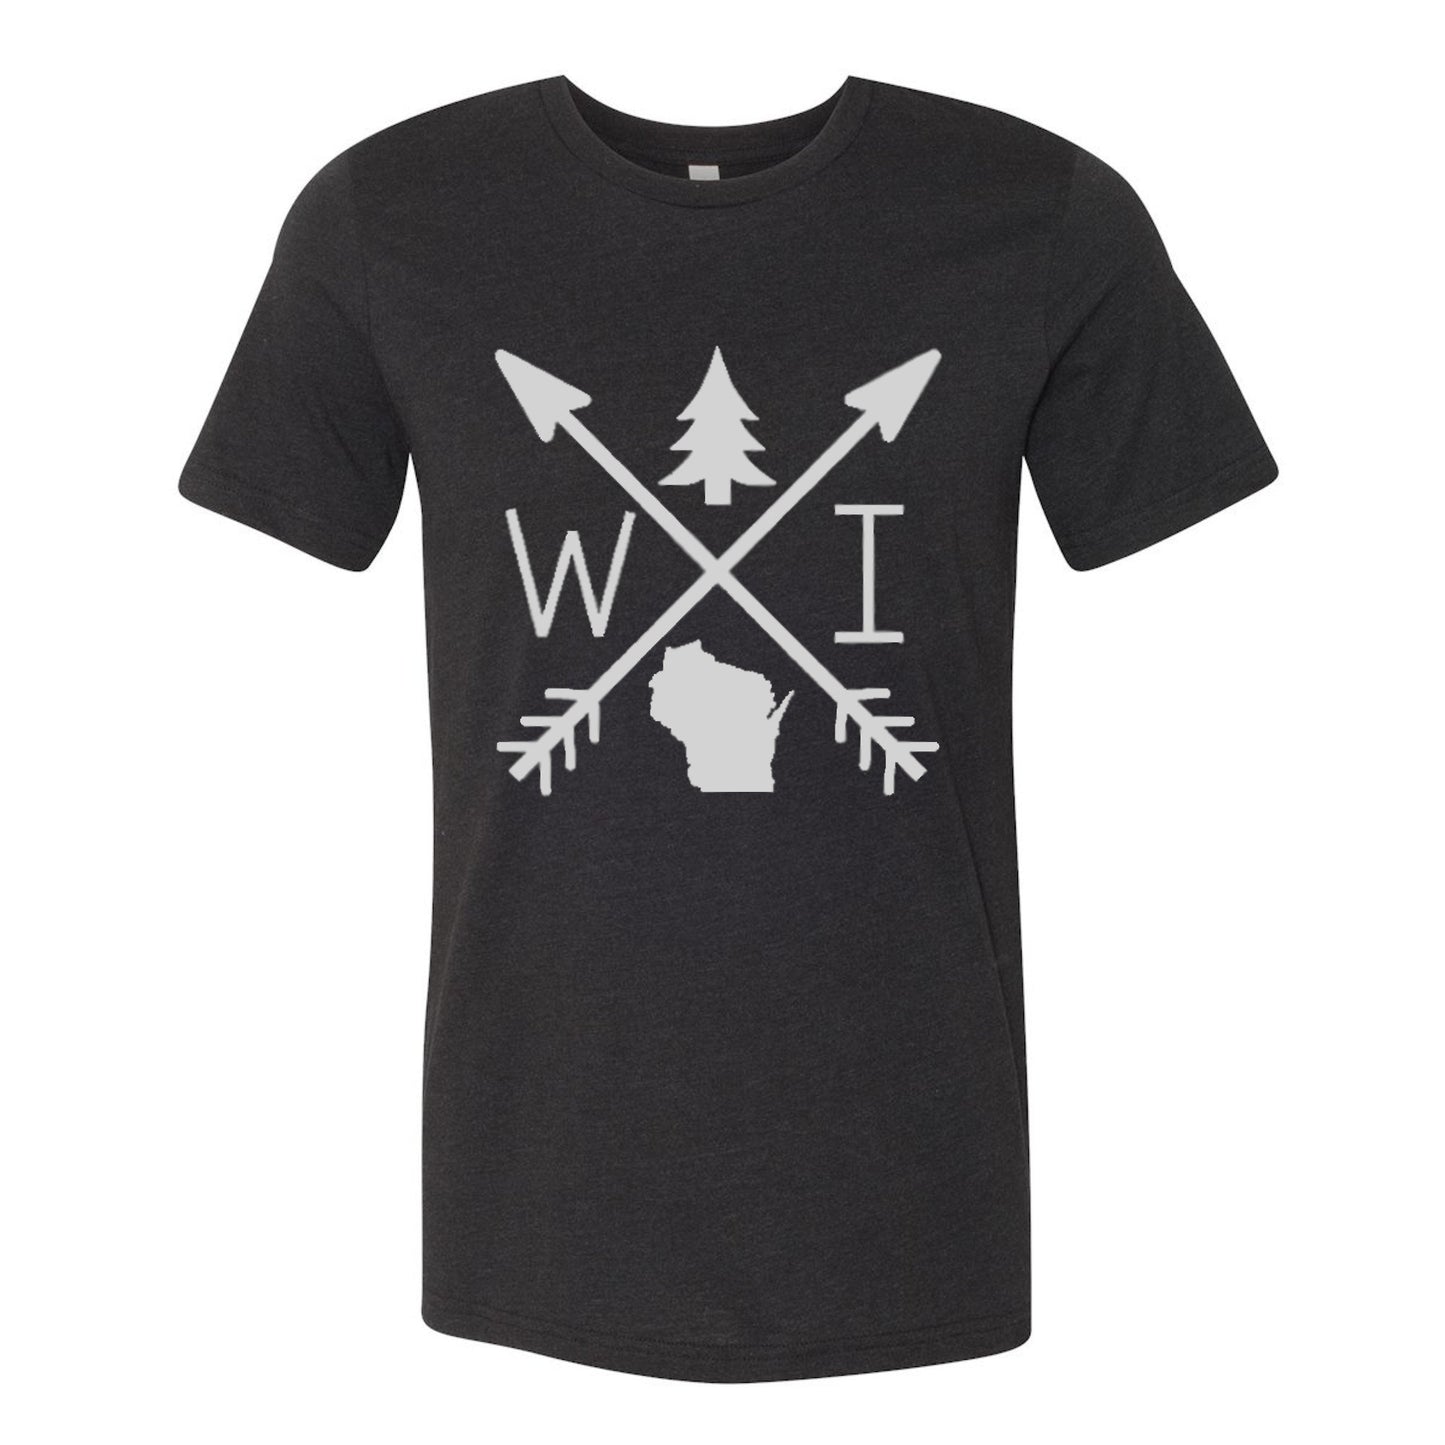 Wisconsin Arrows T-Shirt - Heather Black - ready to ship